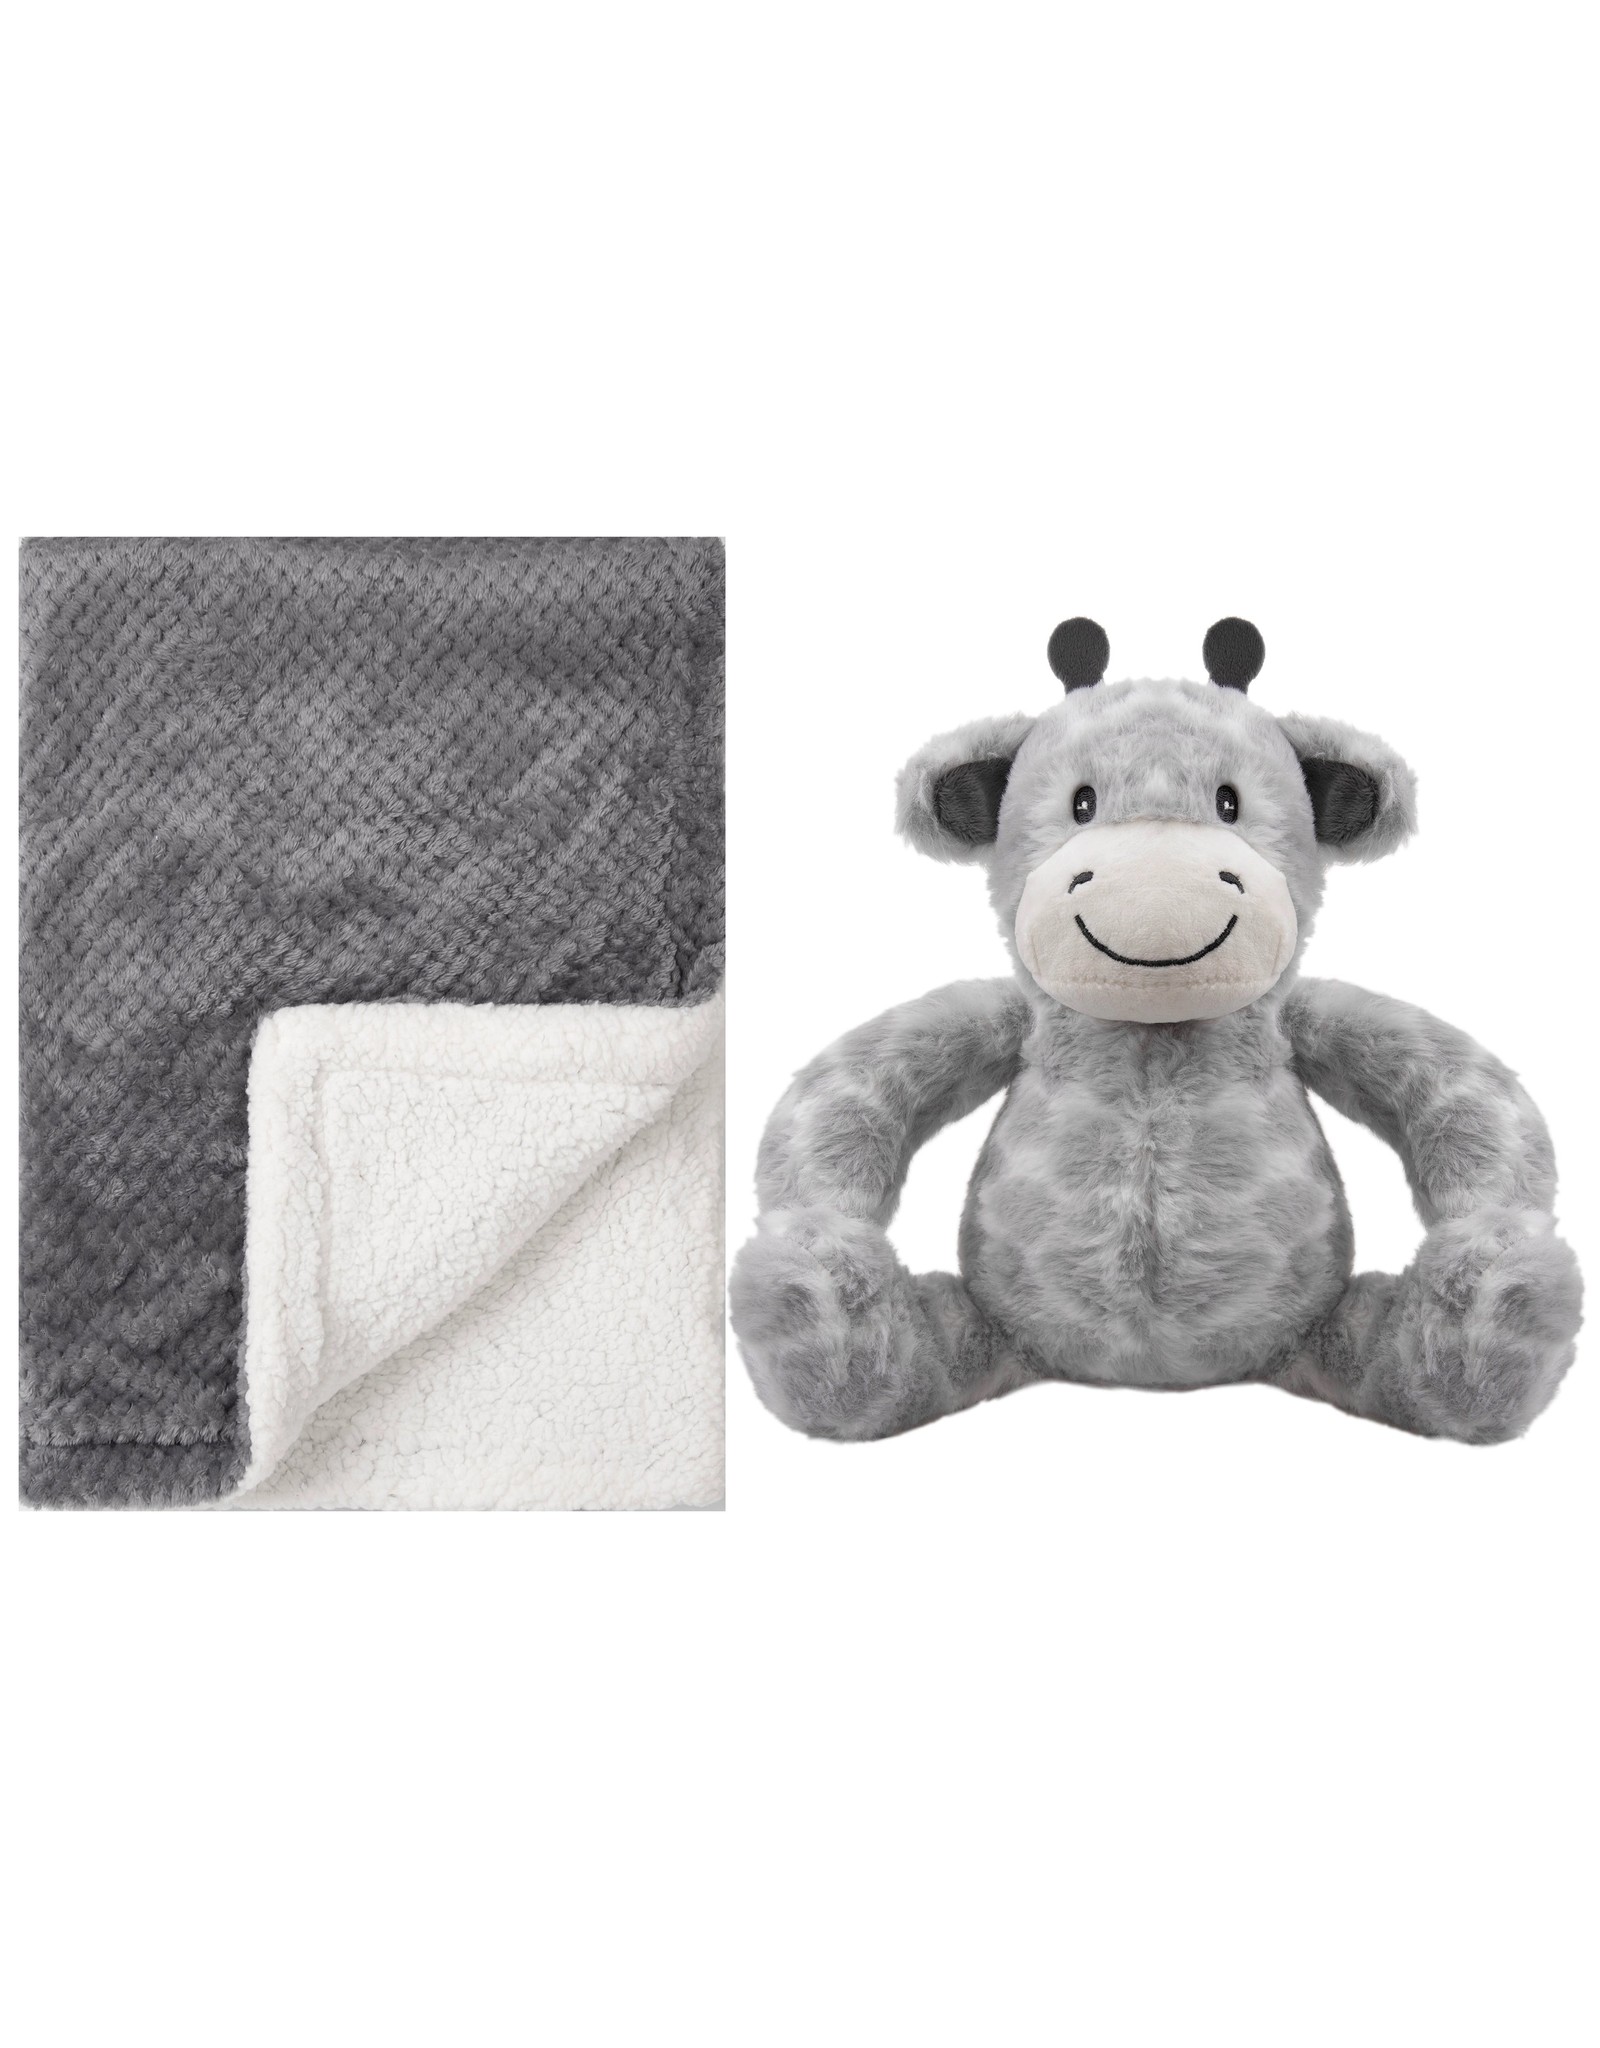 Gaz Concepts Blanket & Stuffed Animal Gift Set - Giraffe